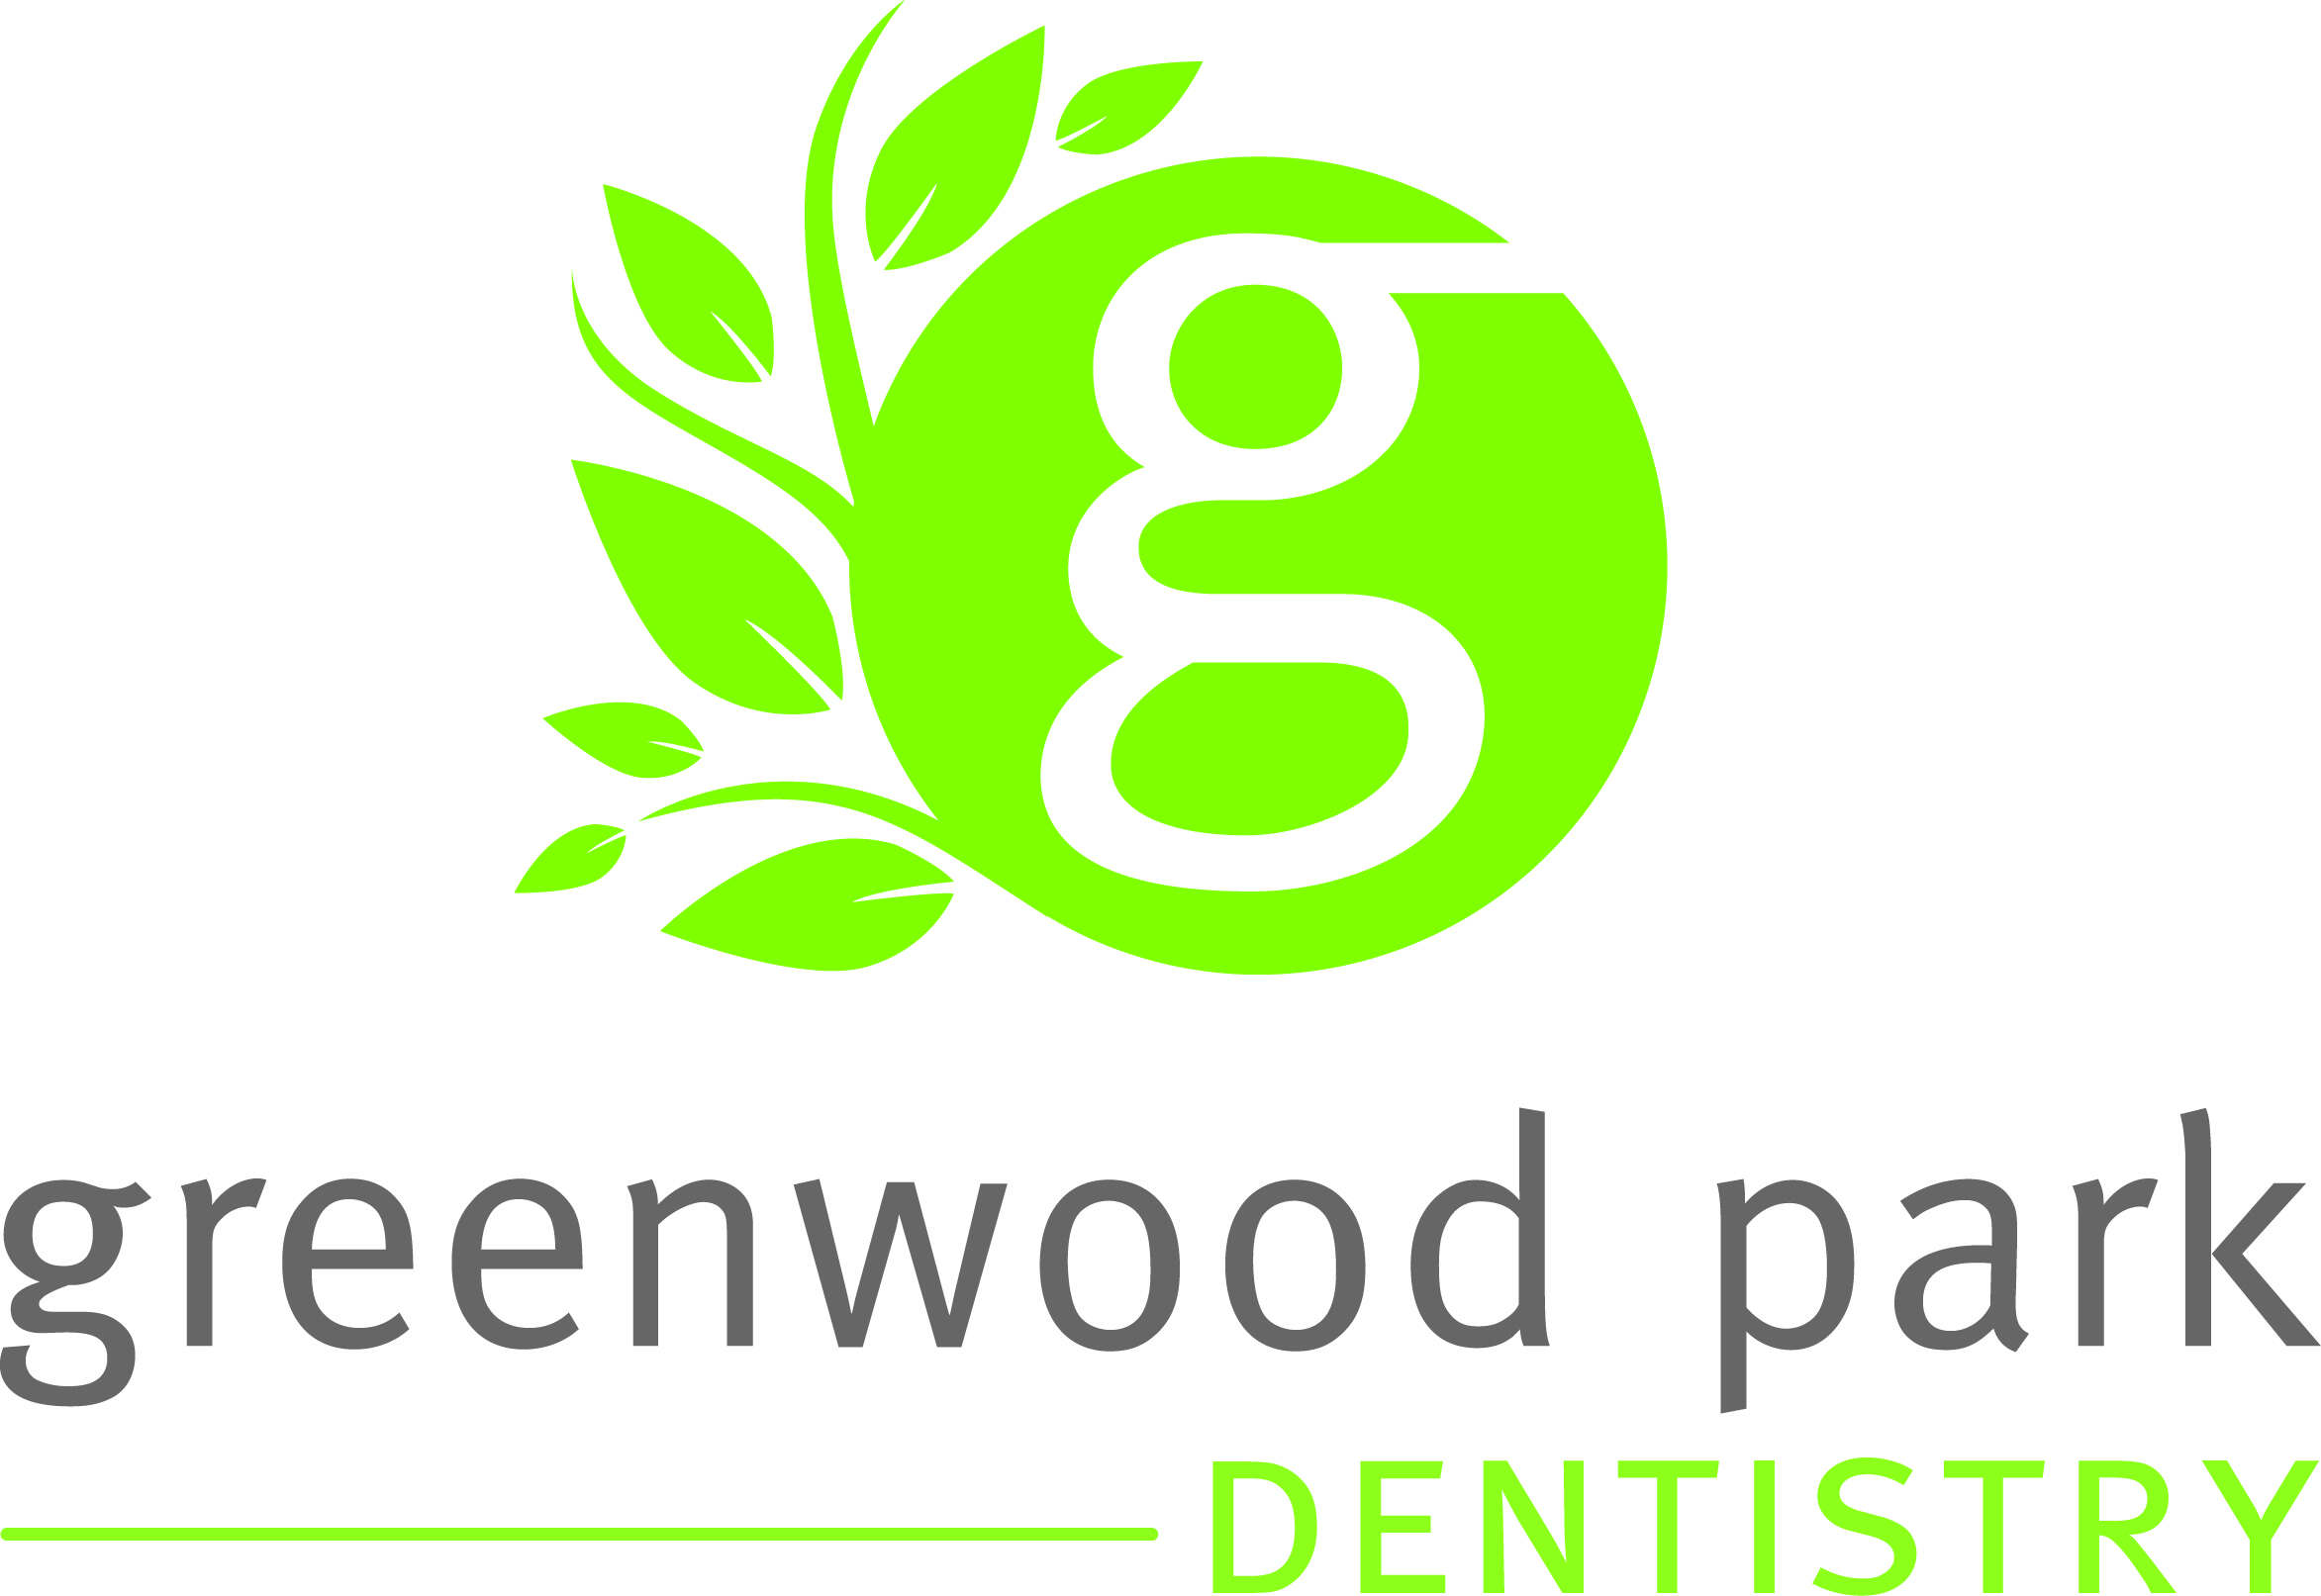 Greenwood Park Dentistry